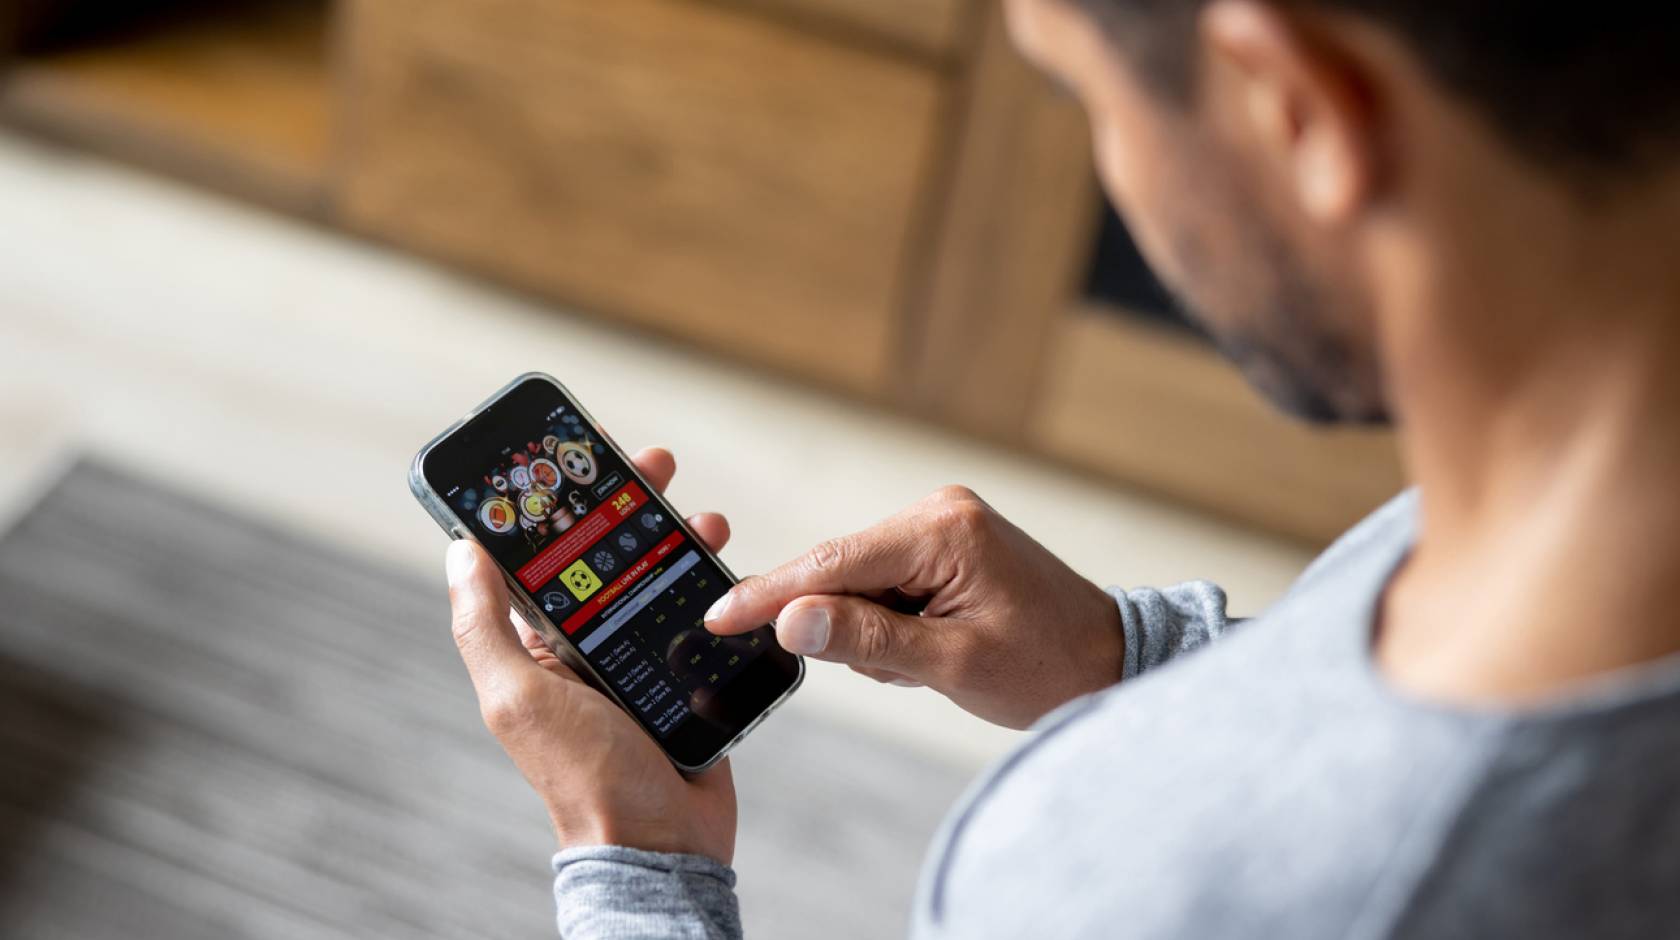 Man looks at gambling app on smartphone